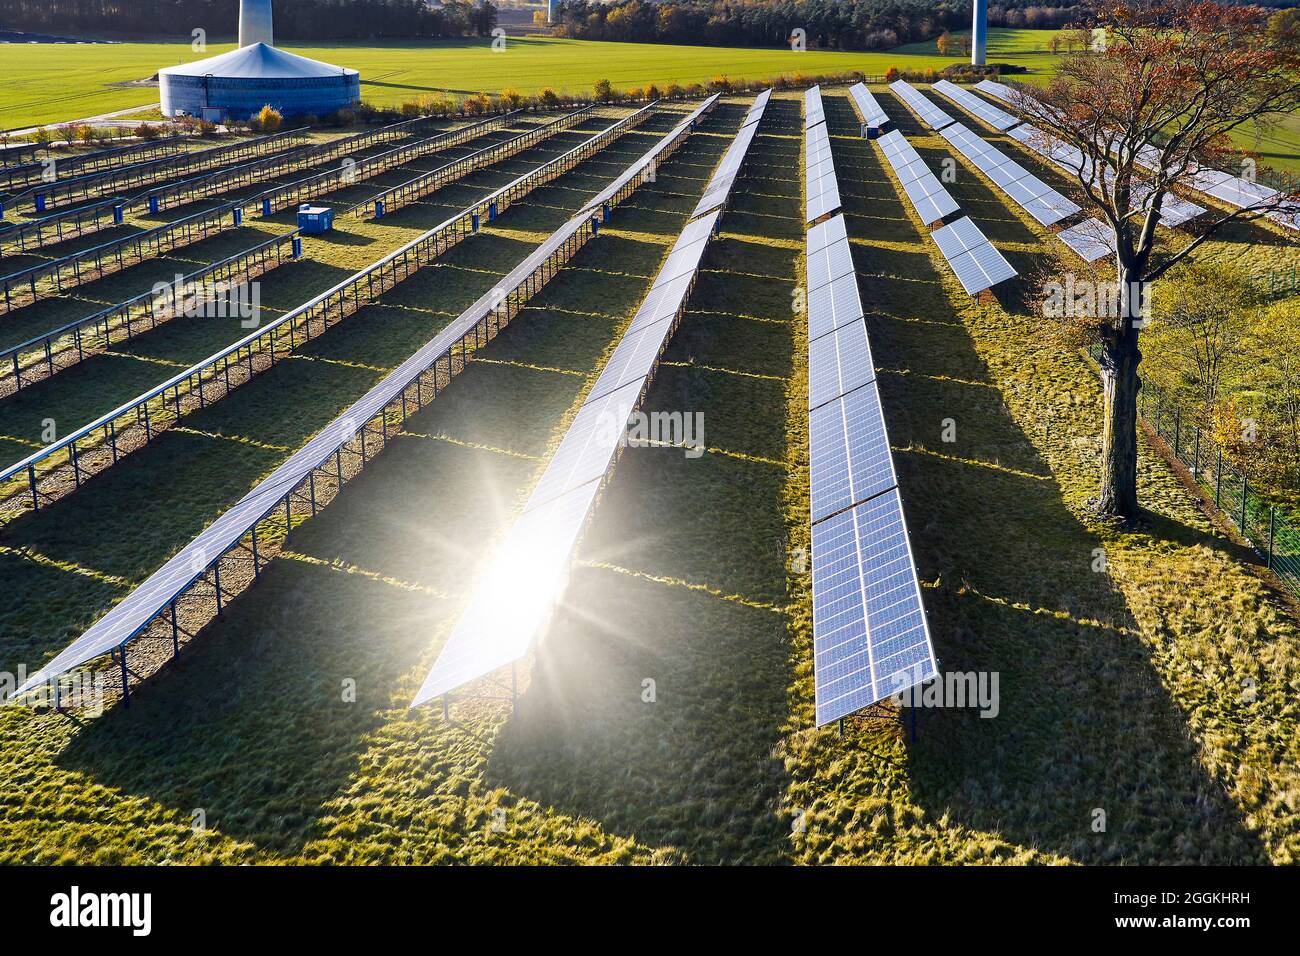 Energy industry, sustainability, wind energy and solar energy, solar field and wind park, solar reflection on solar panel Stock Photo